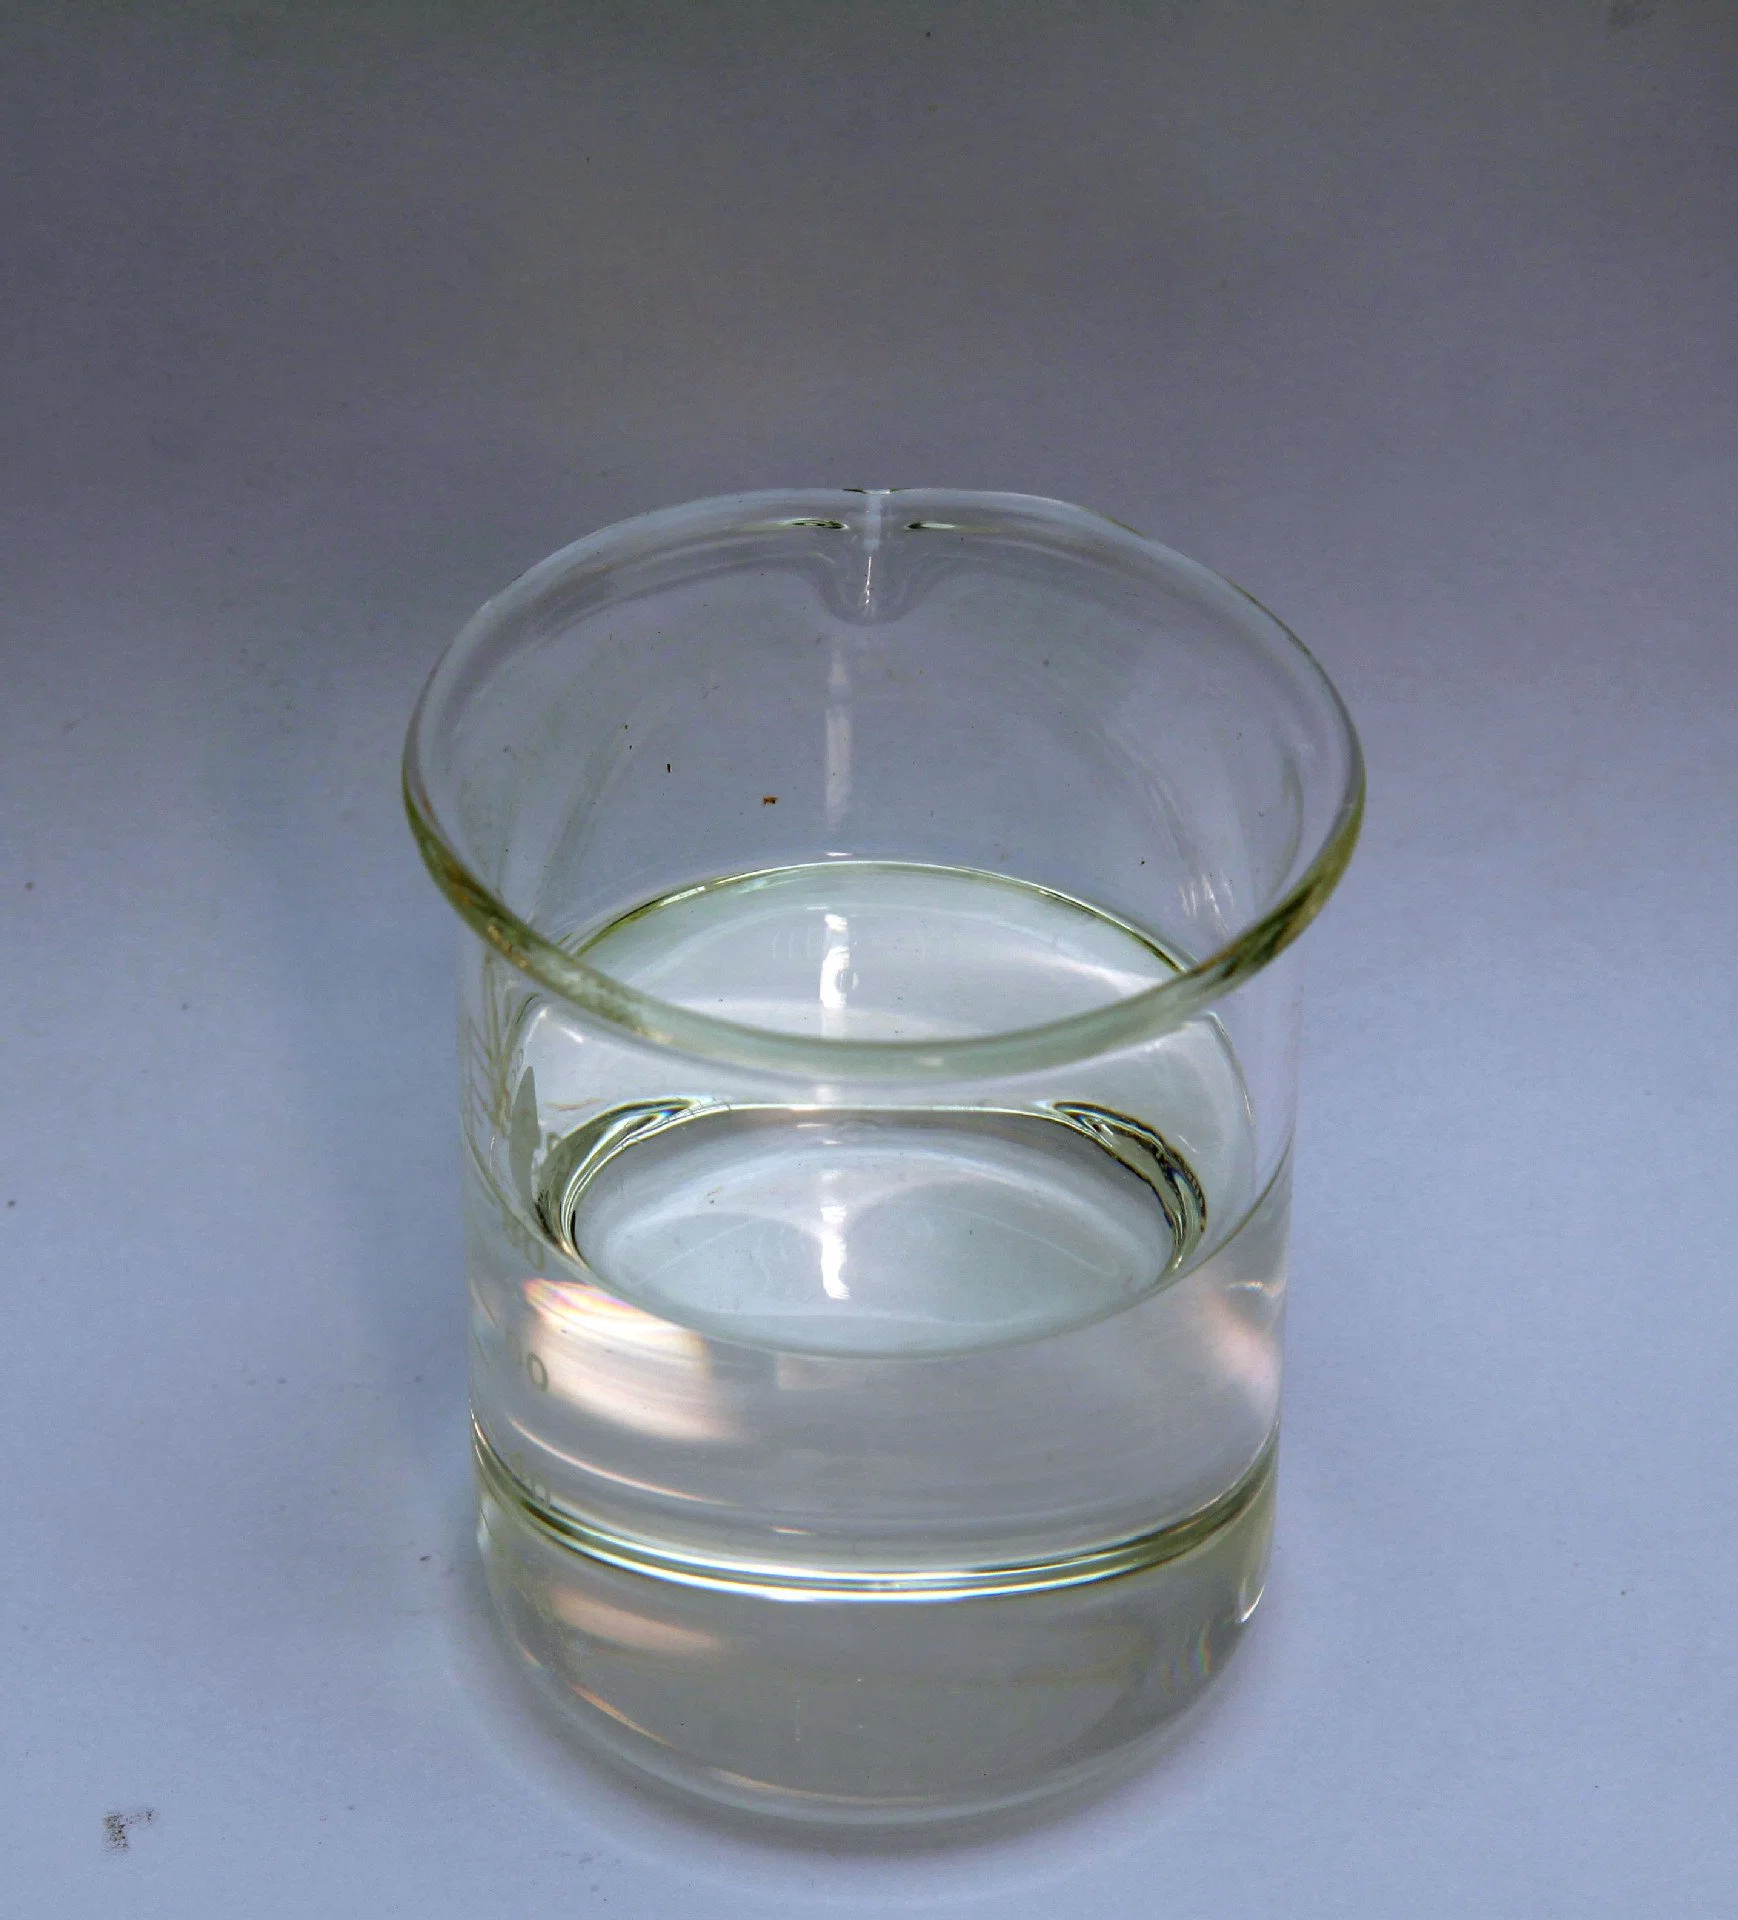 Direktvertrieb National Standard farblos 99,8% Dimethylcyclosiloxan (DMC) für Silikon Gummi